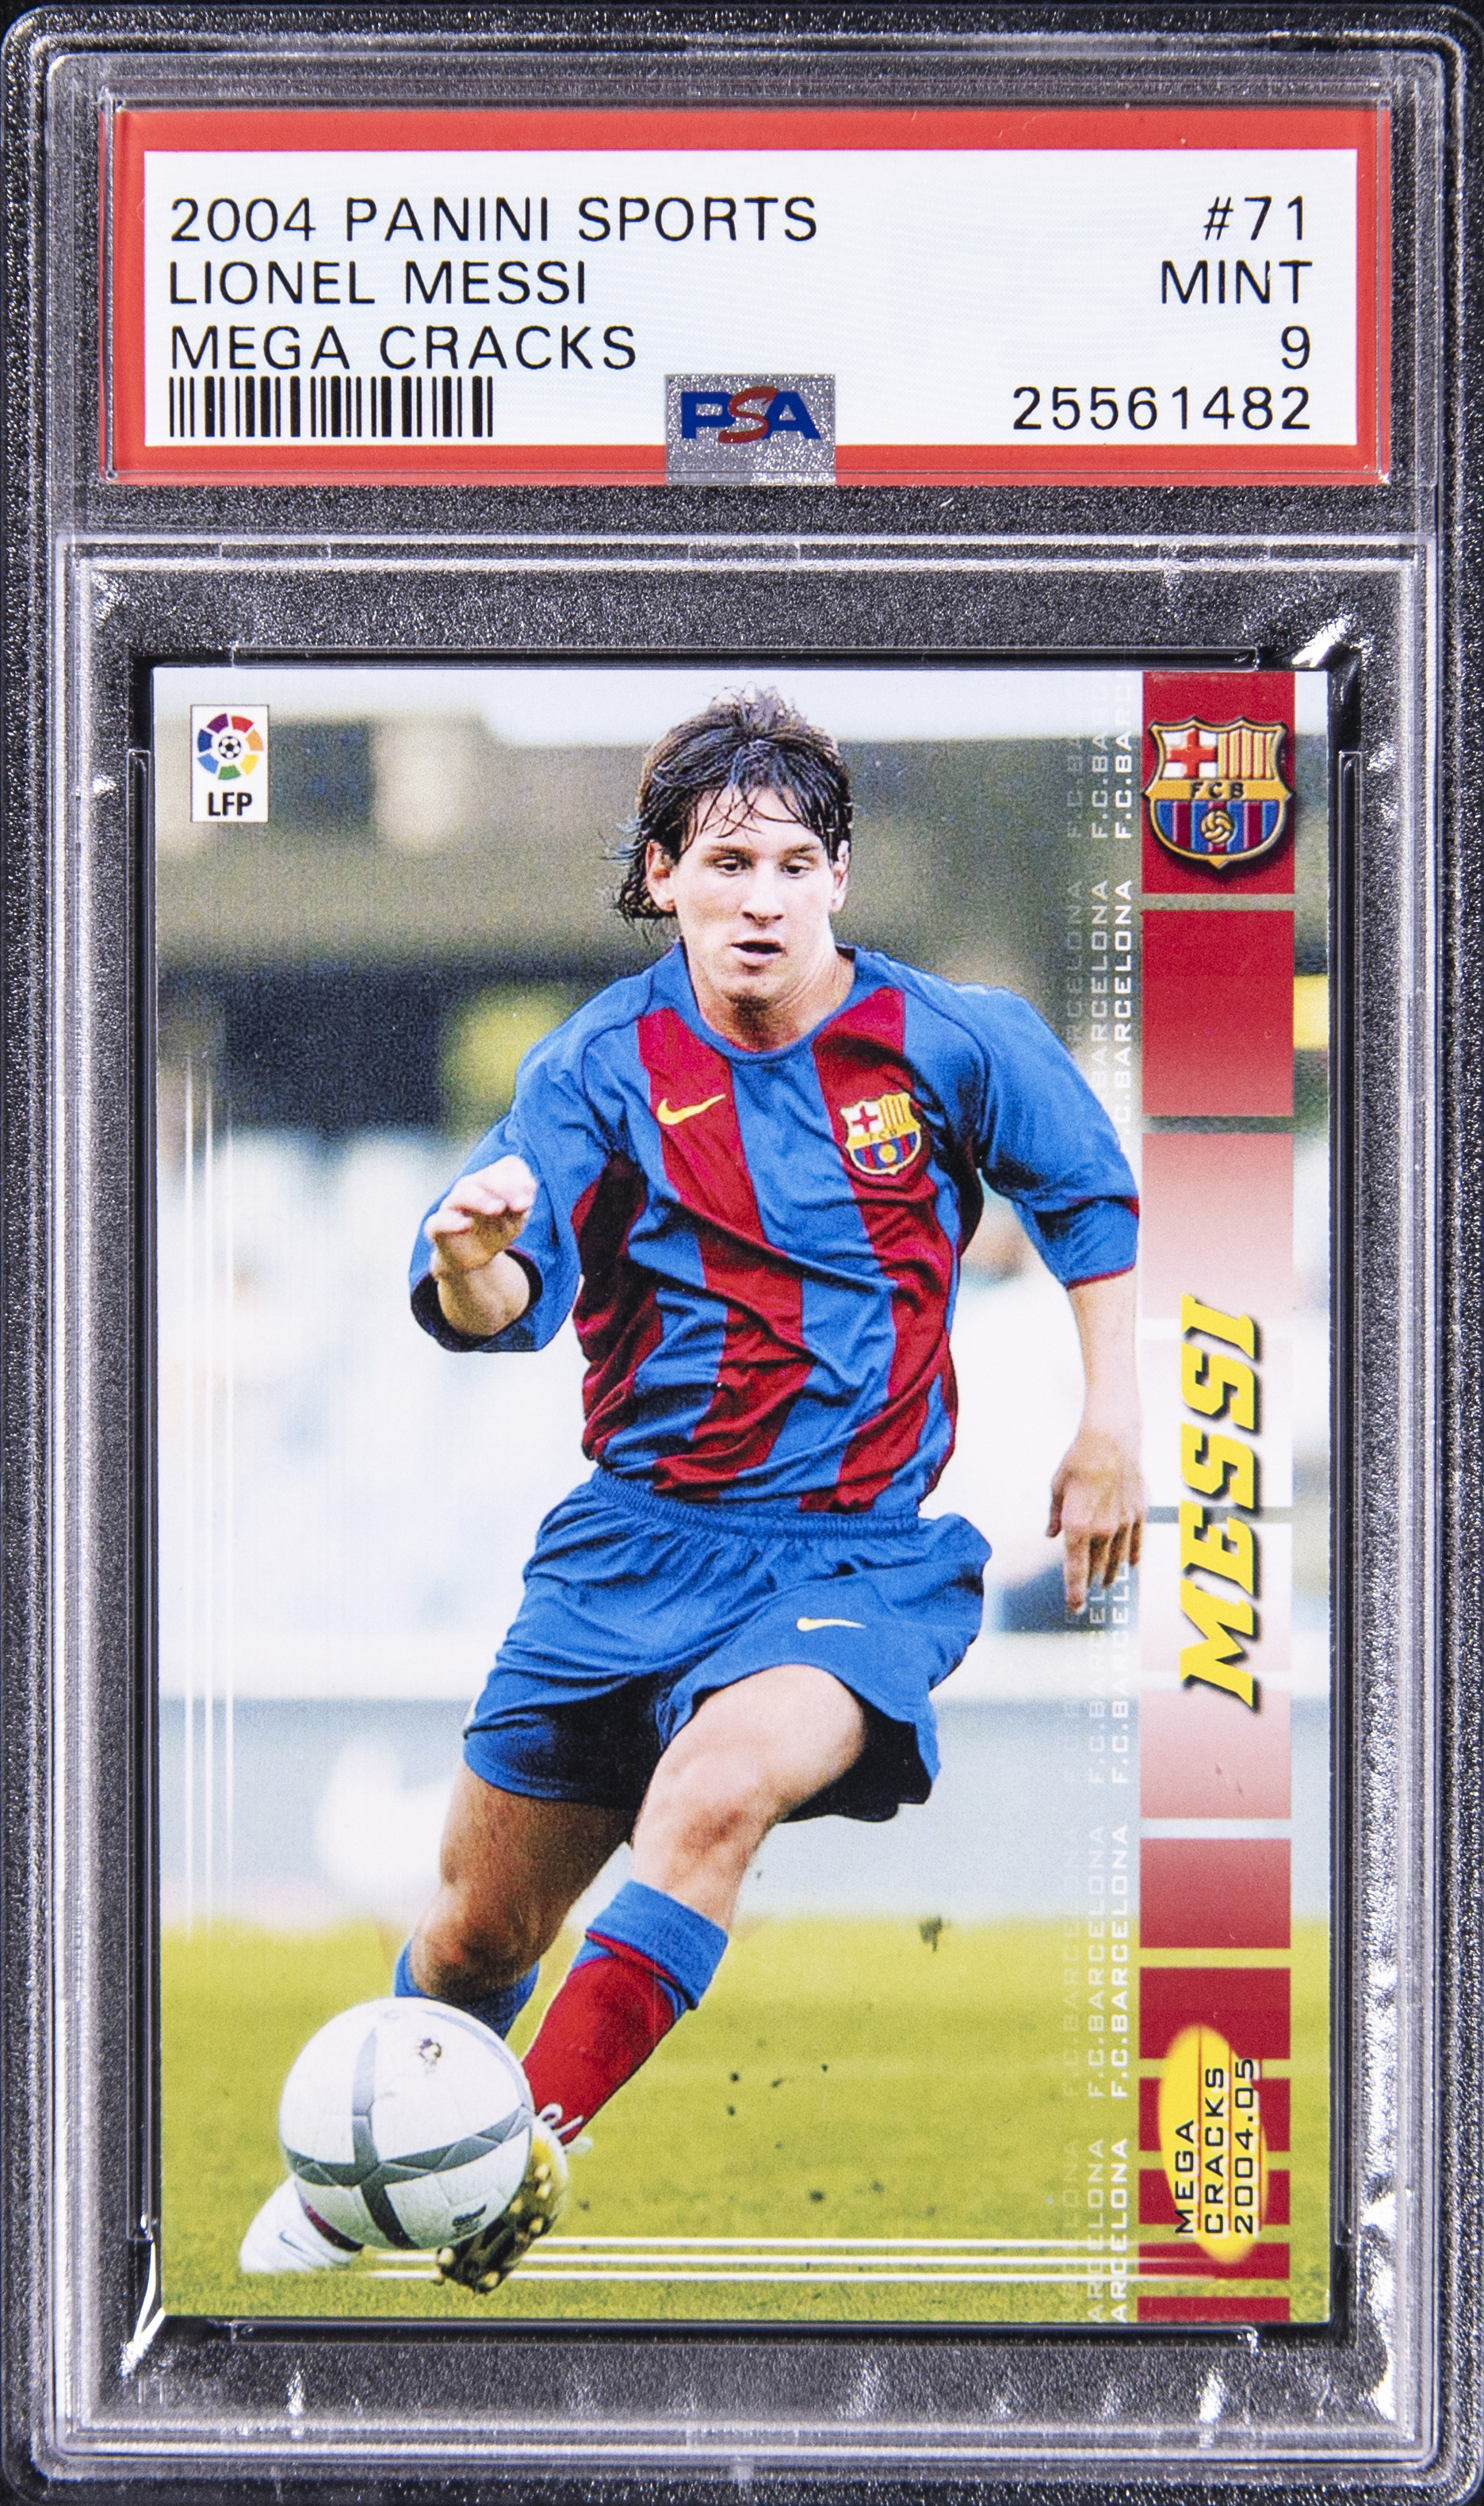 2004 Panini Sports Mega Cracks #71 Lionel Messi Rookie Card – PSA MINT 9